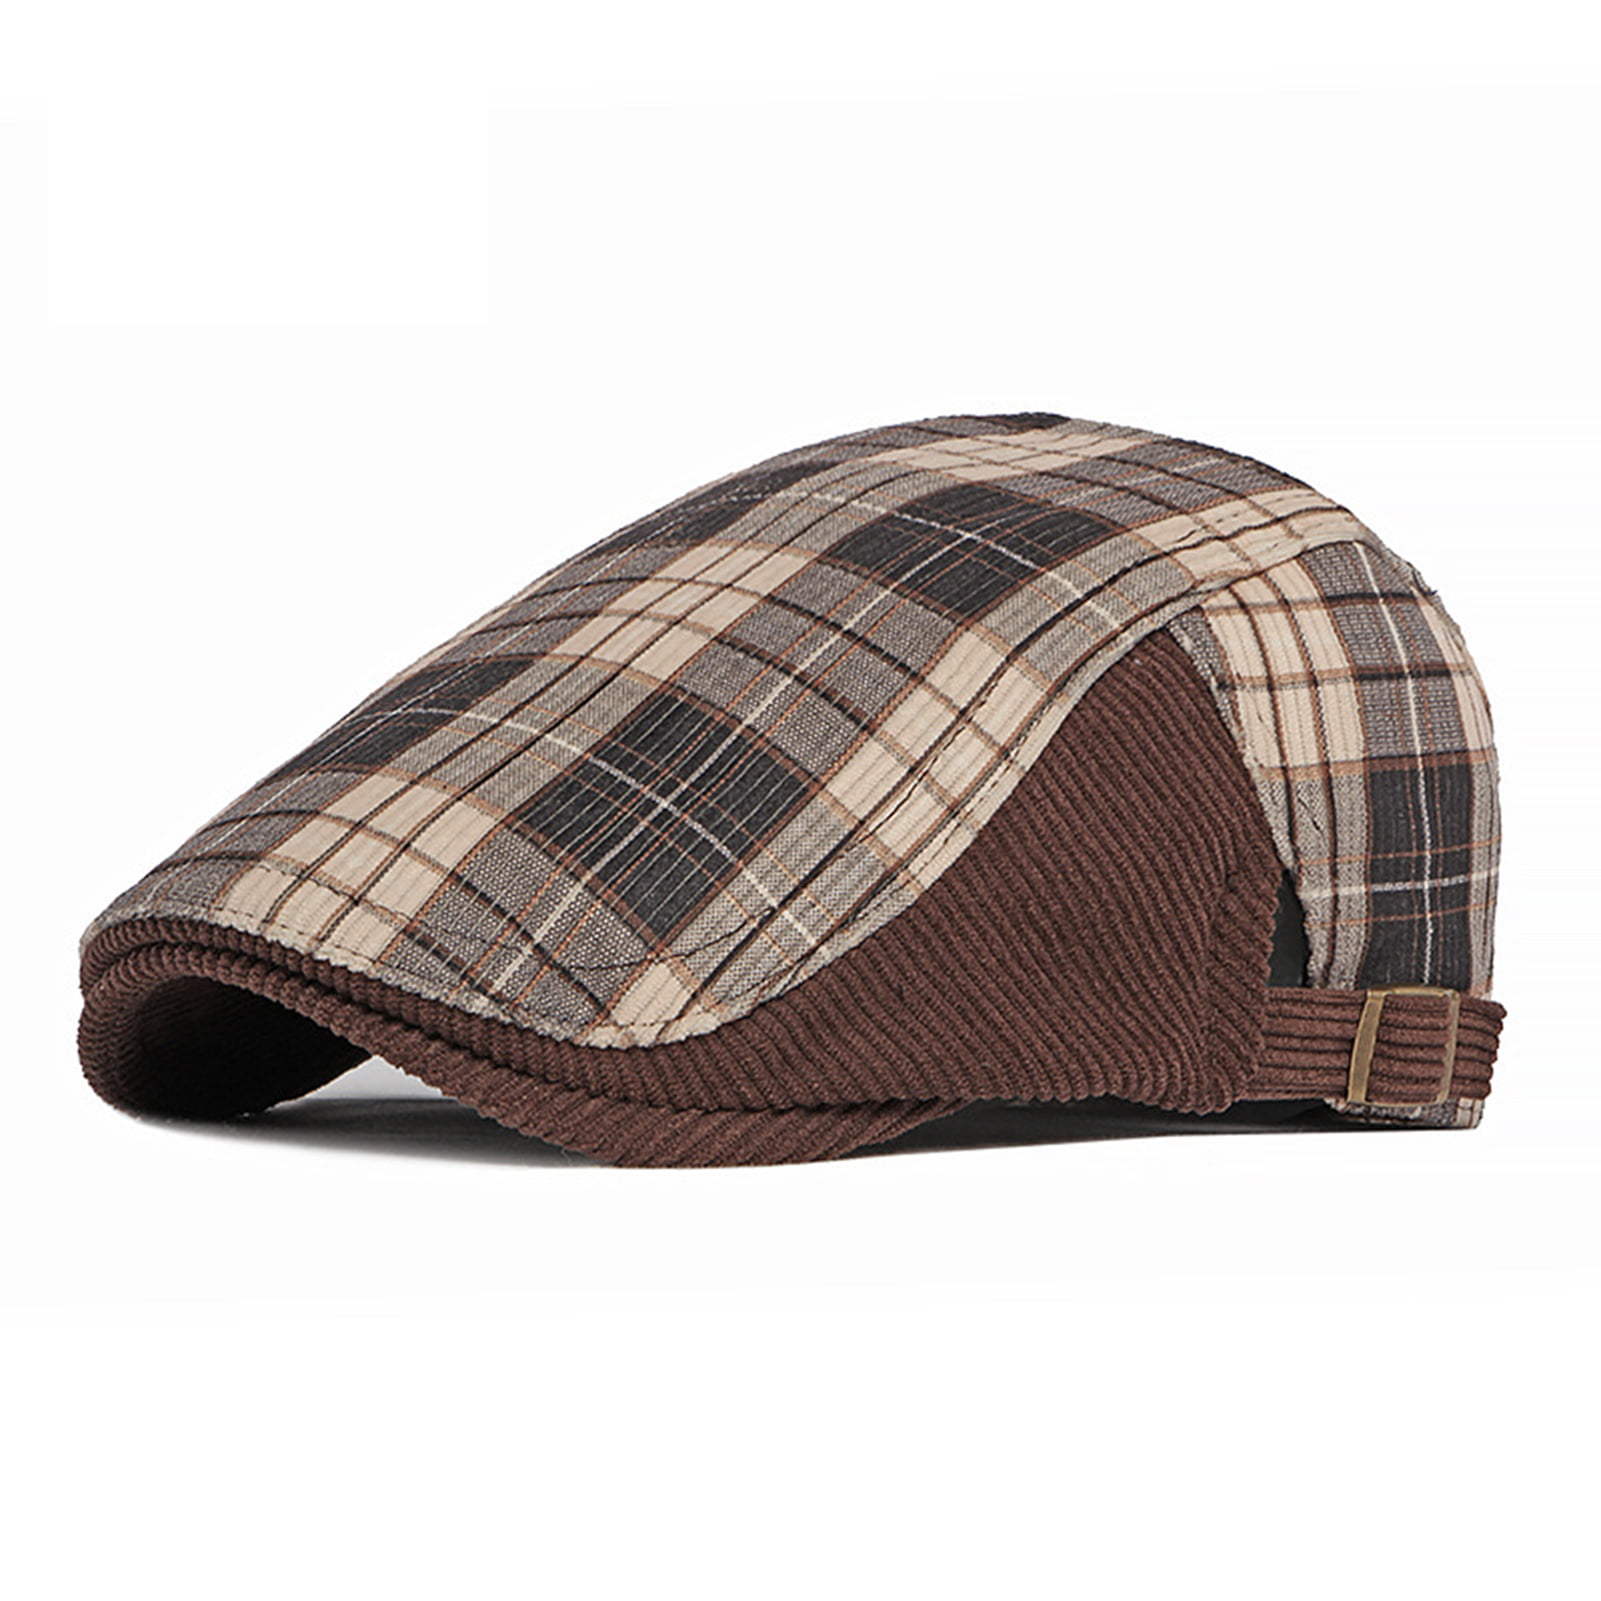 D-groee Men's Flat Cap Durable Gatsby Newsboy Lvy Irish Hats Driving Cabbie Hunting Cap, Size: One size, Blue